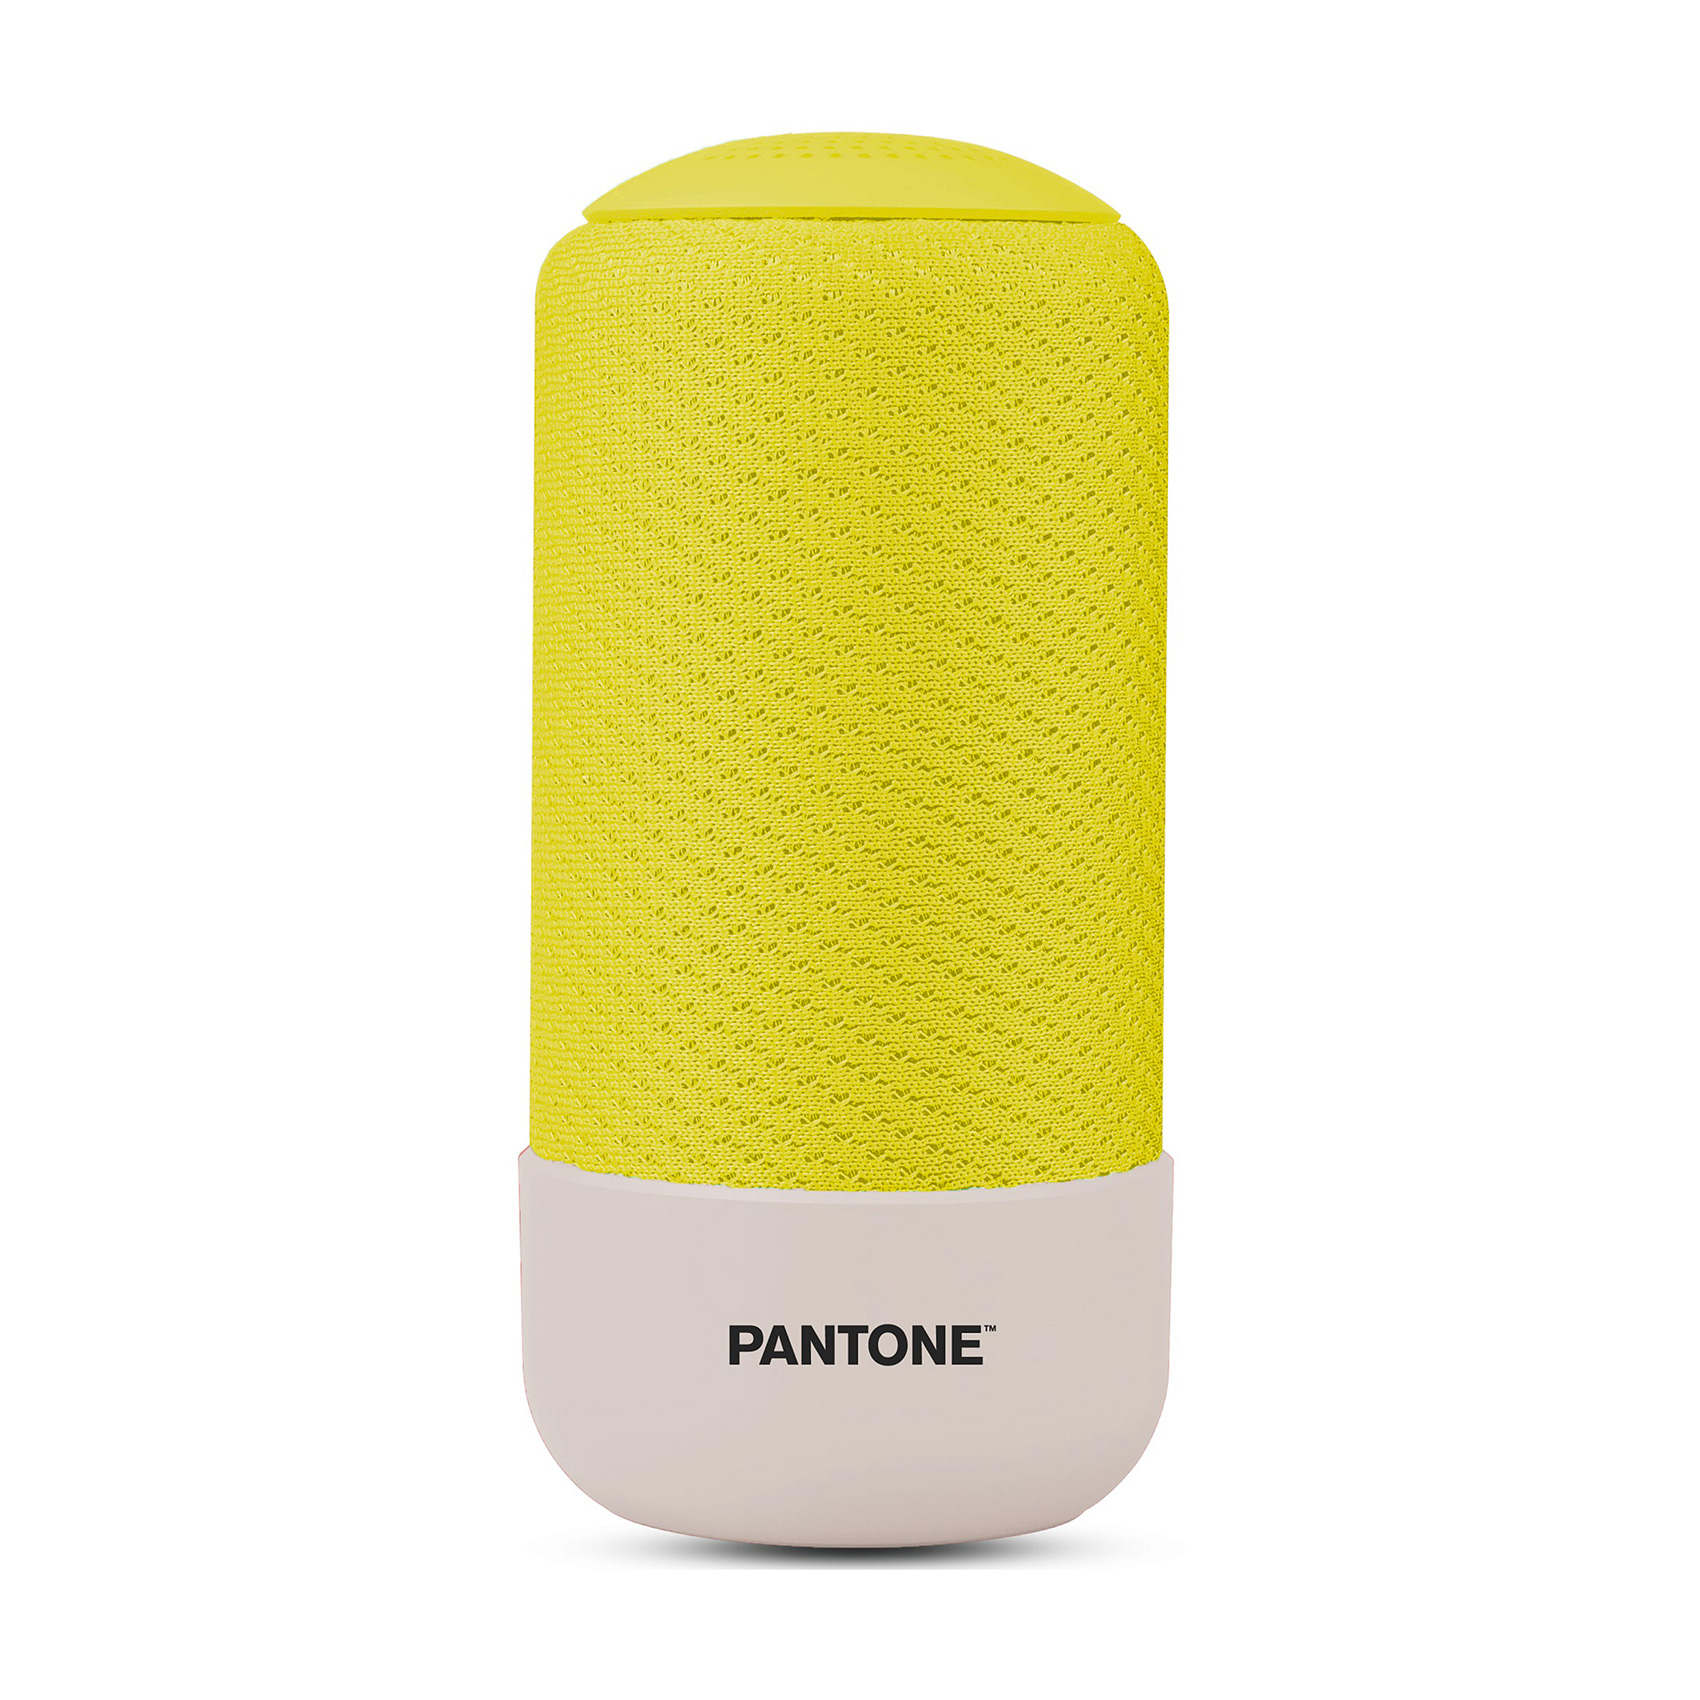 PANTONE PT-BS001L prenosivi bluetooth zvučnik u ŽUTOJ boji slika 1